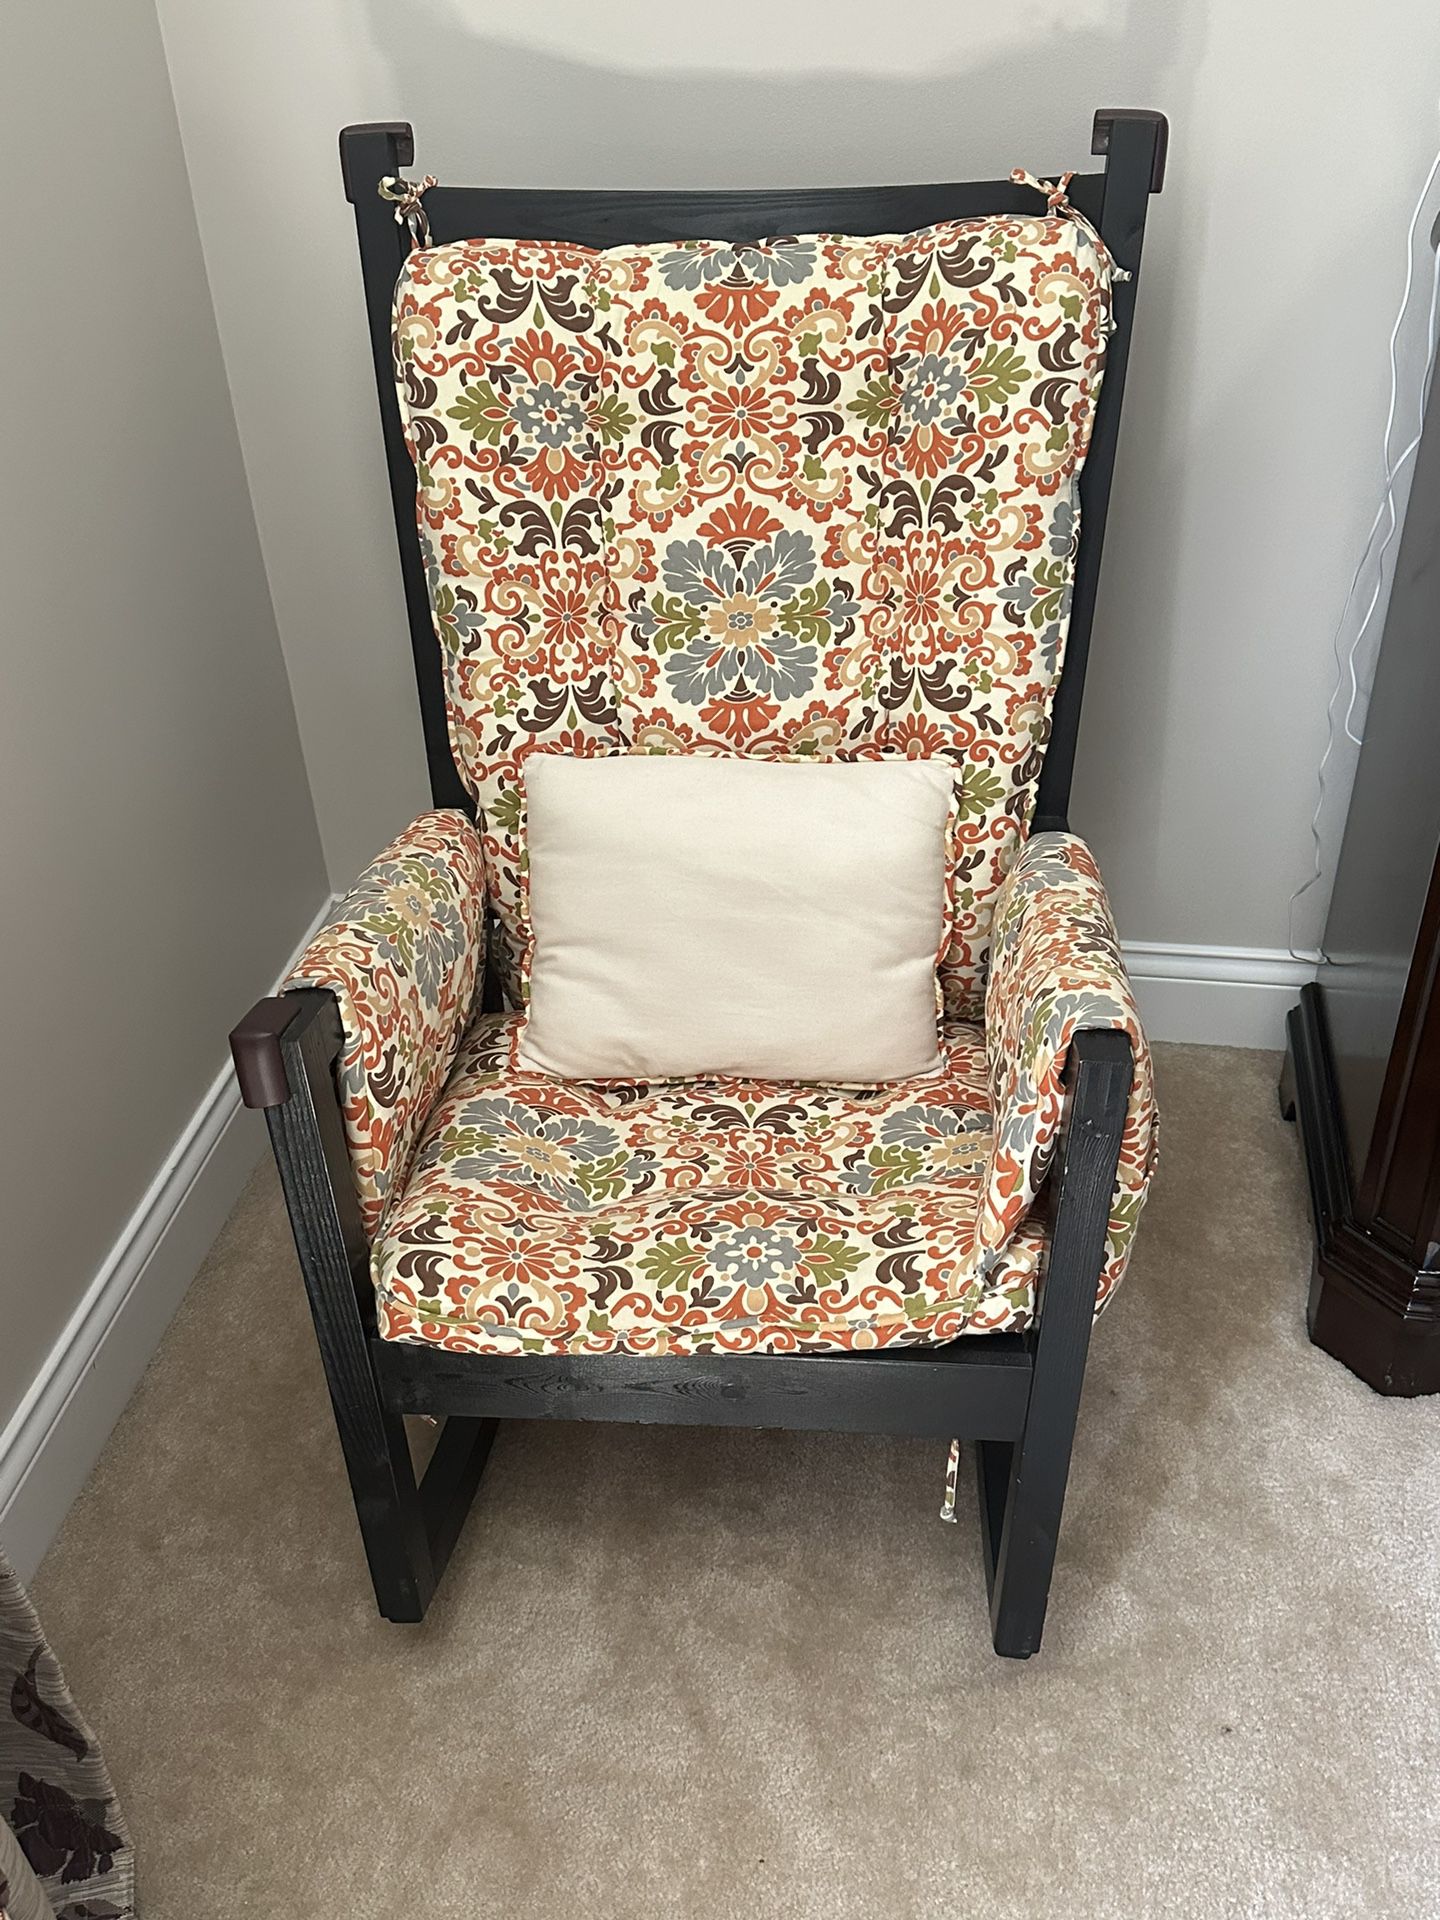 Rocking chair with custom made cushion